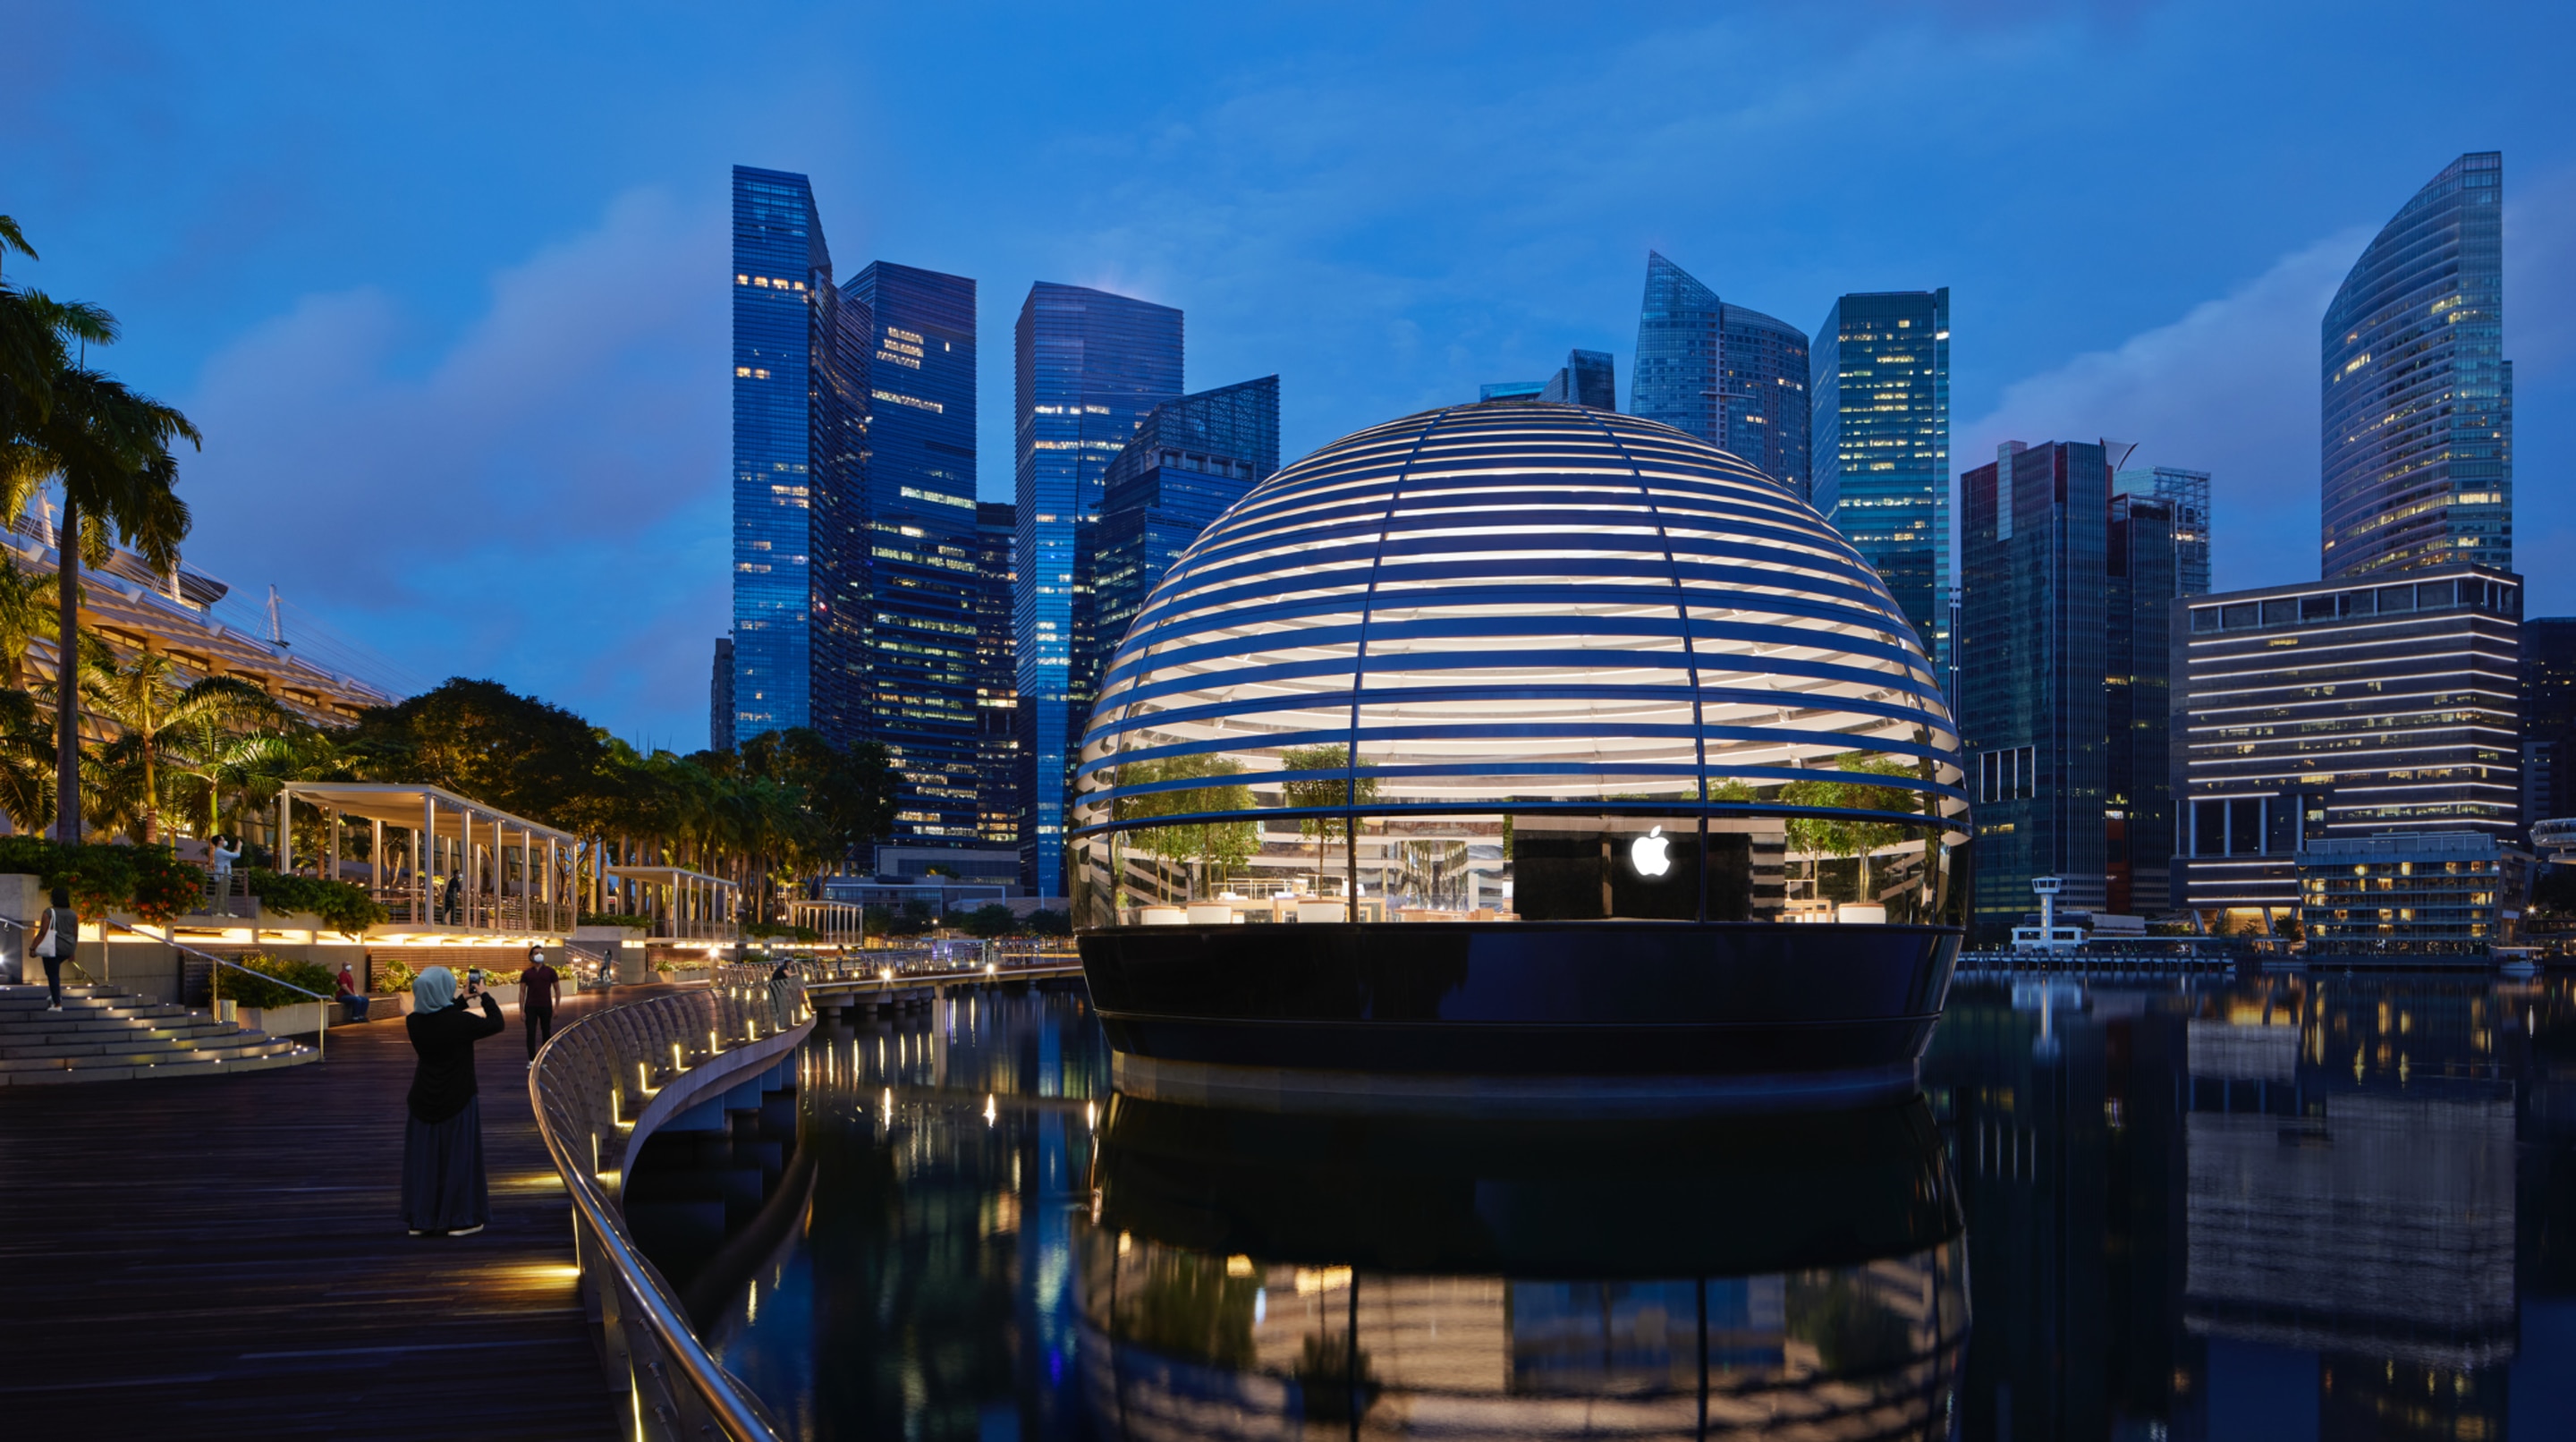 Apple Marina Bay Sands in Singapore, Marina Bay Sands